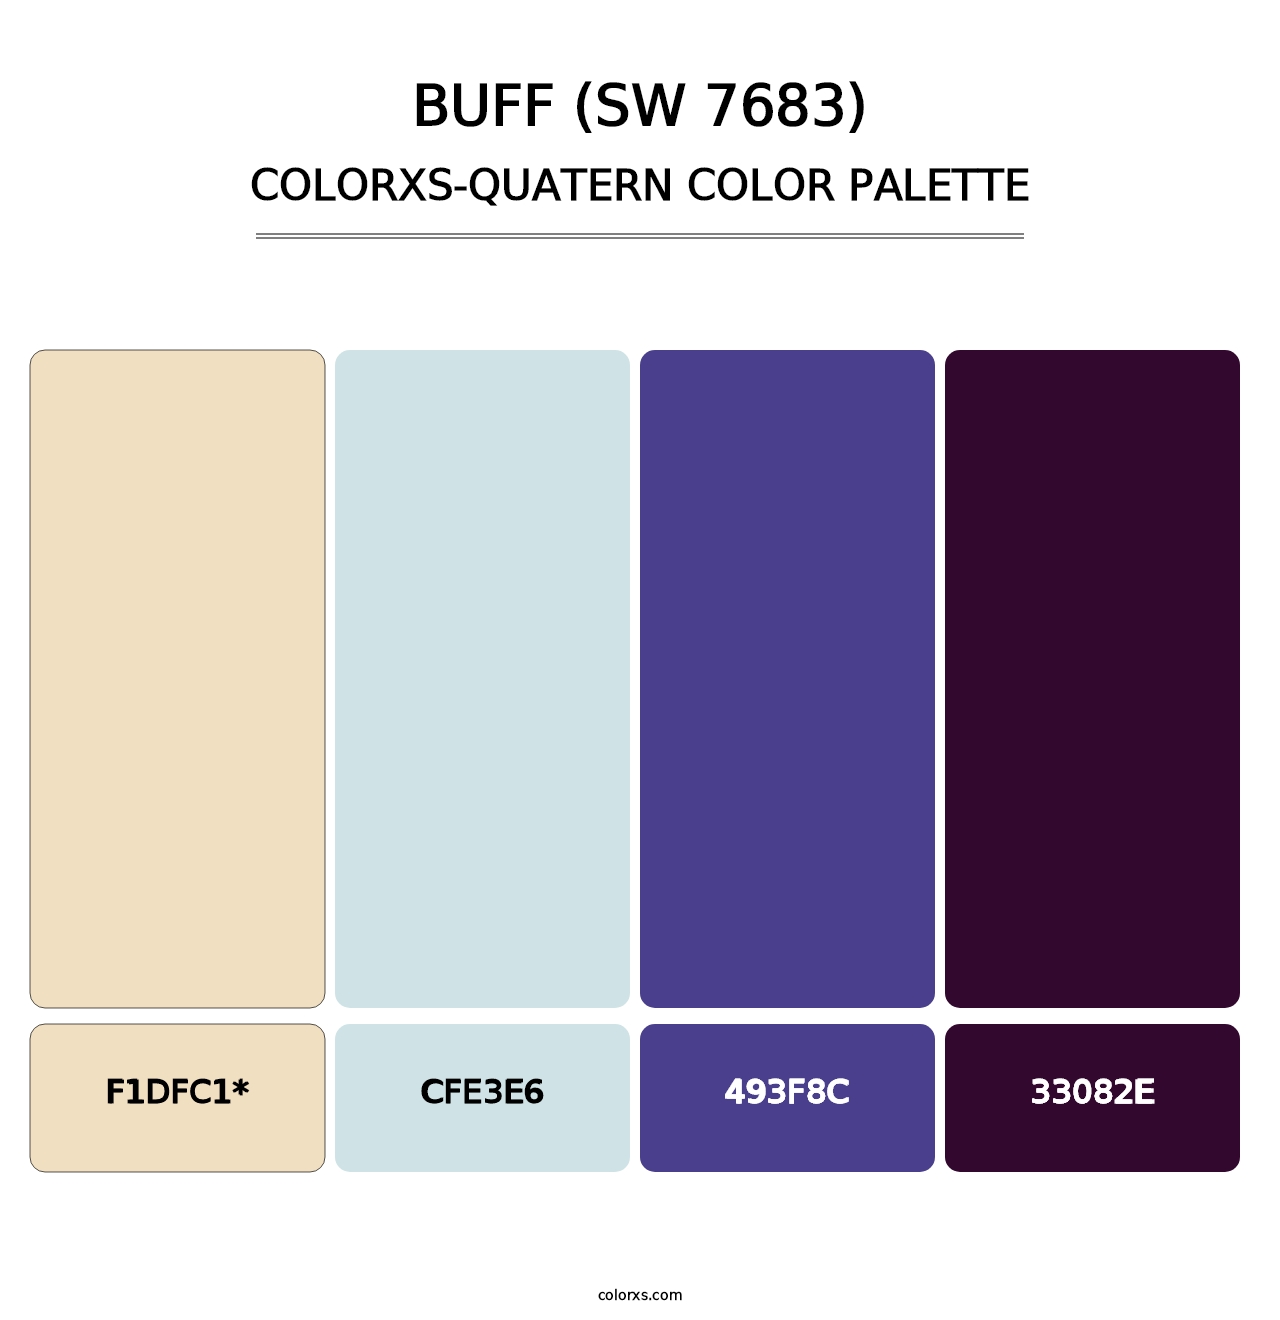 Buff (SW 7683) - Colorxs Quatern Palette